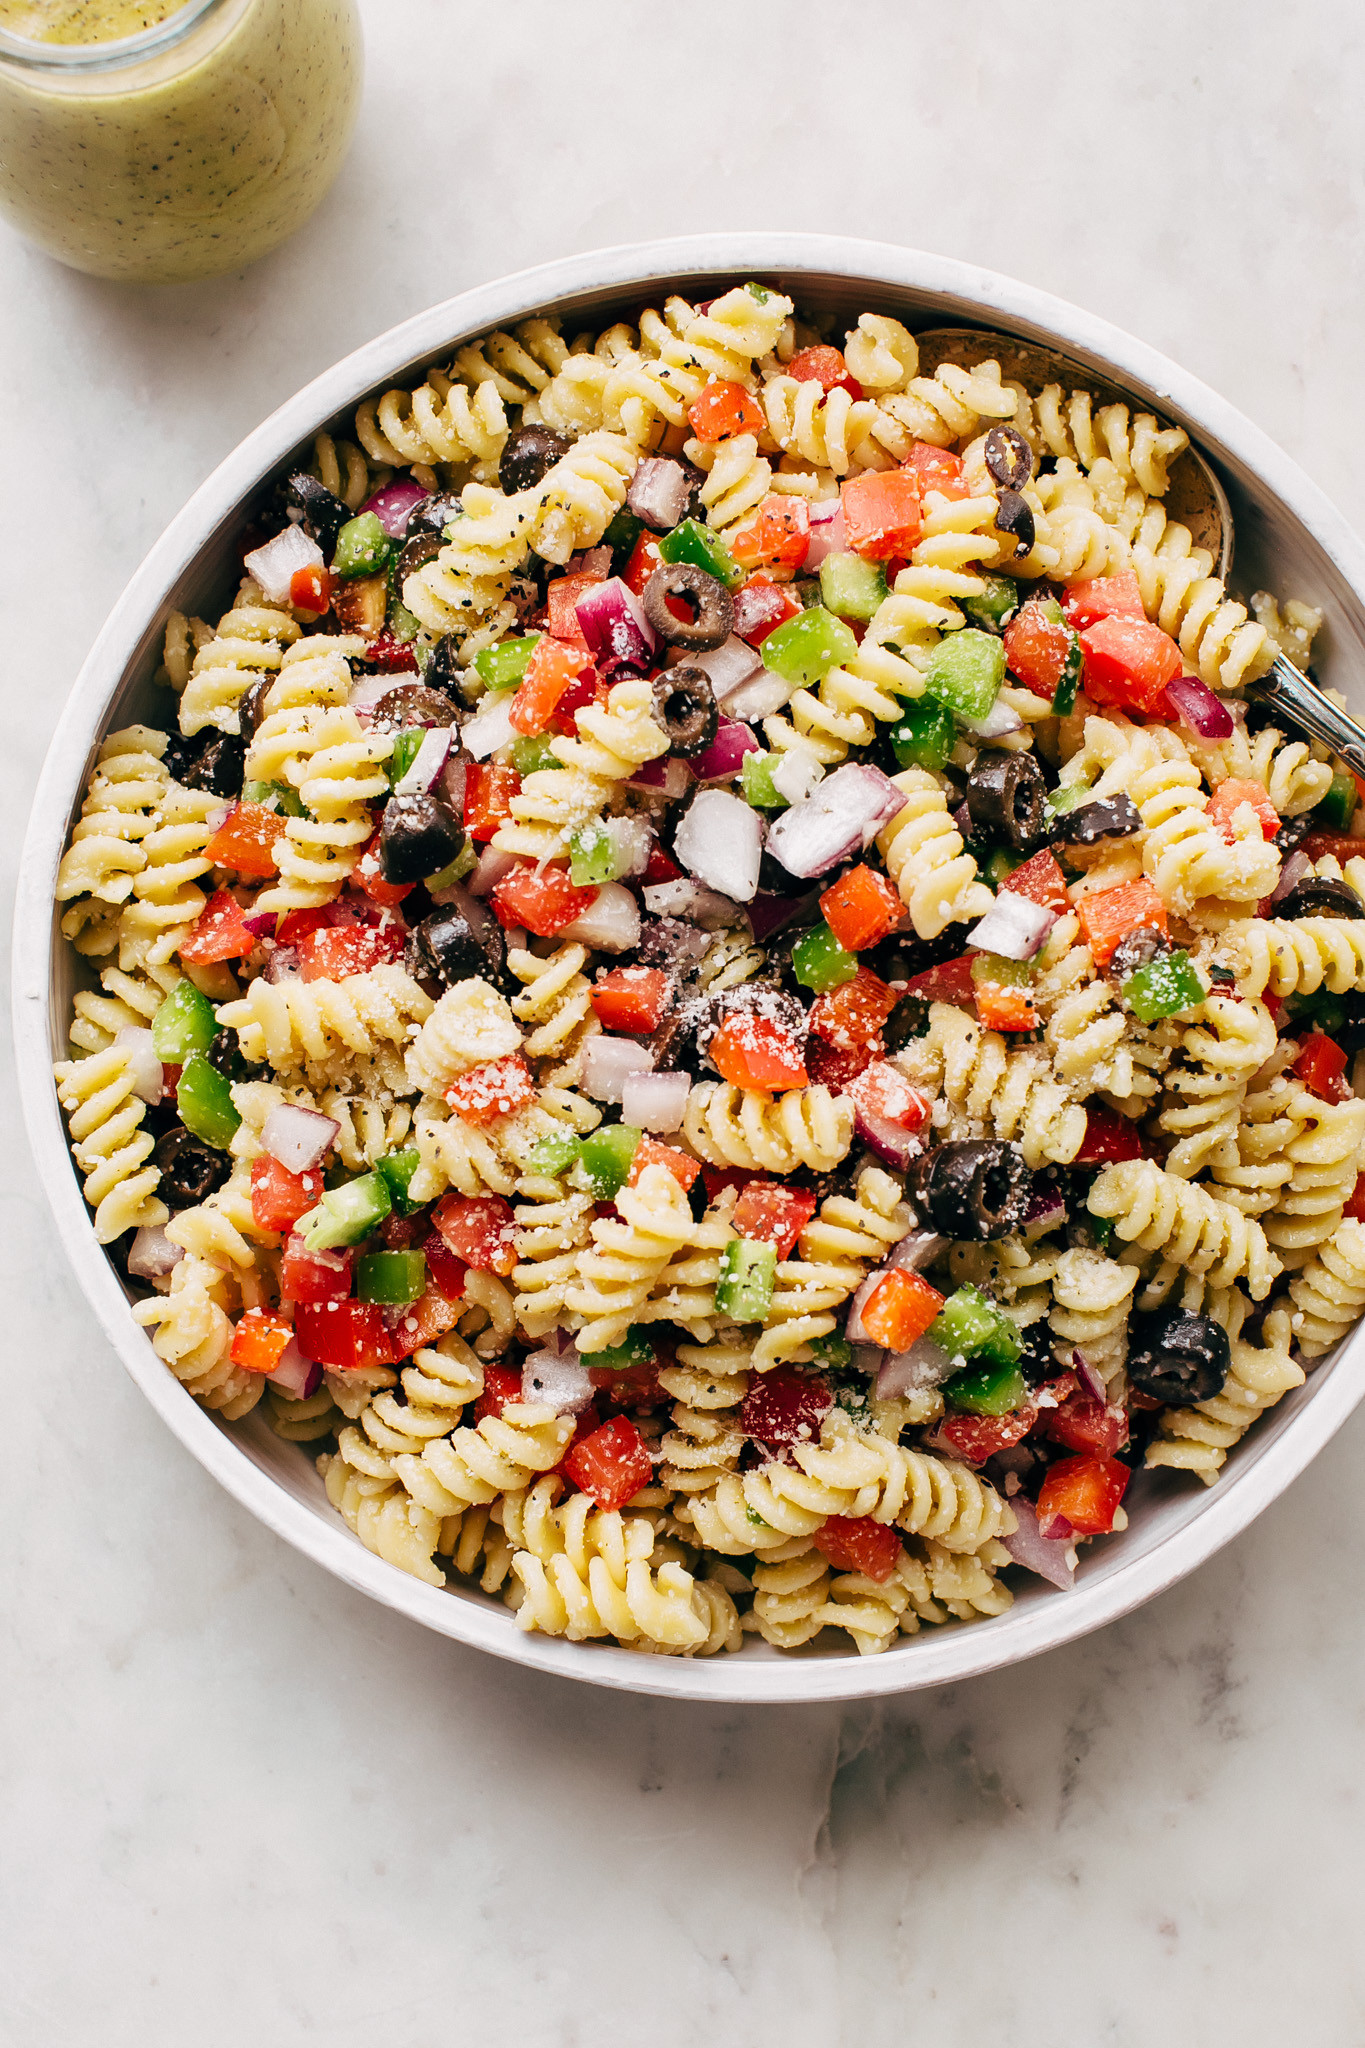 Top 15 Most Popular Pasta Salad with Italian Dressing Recipe